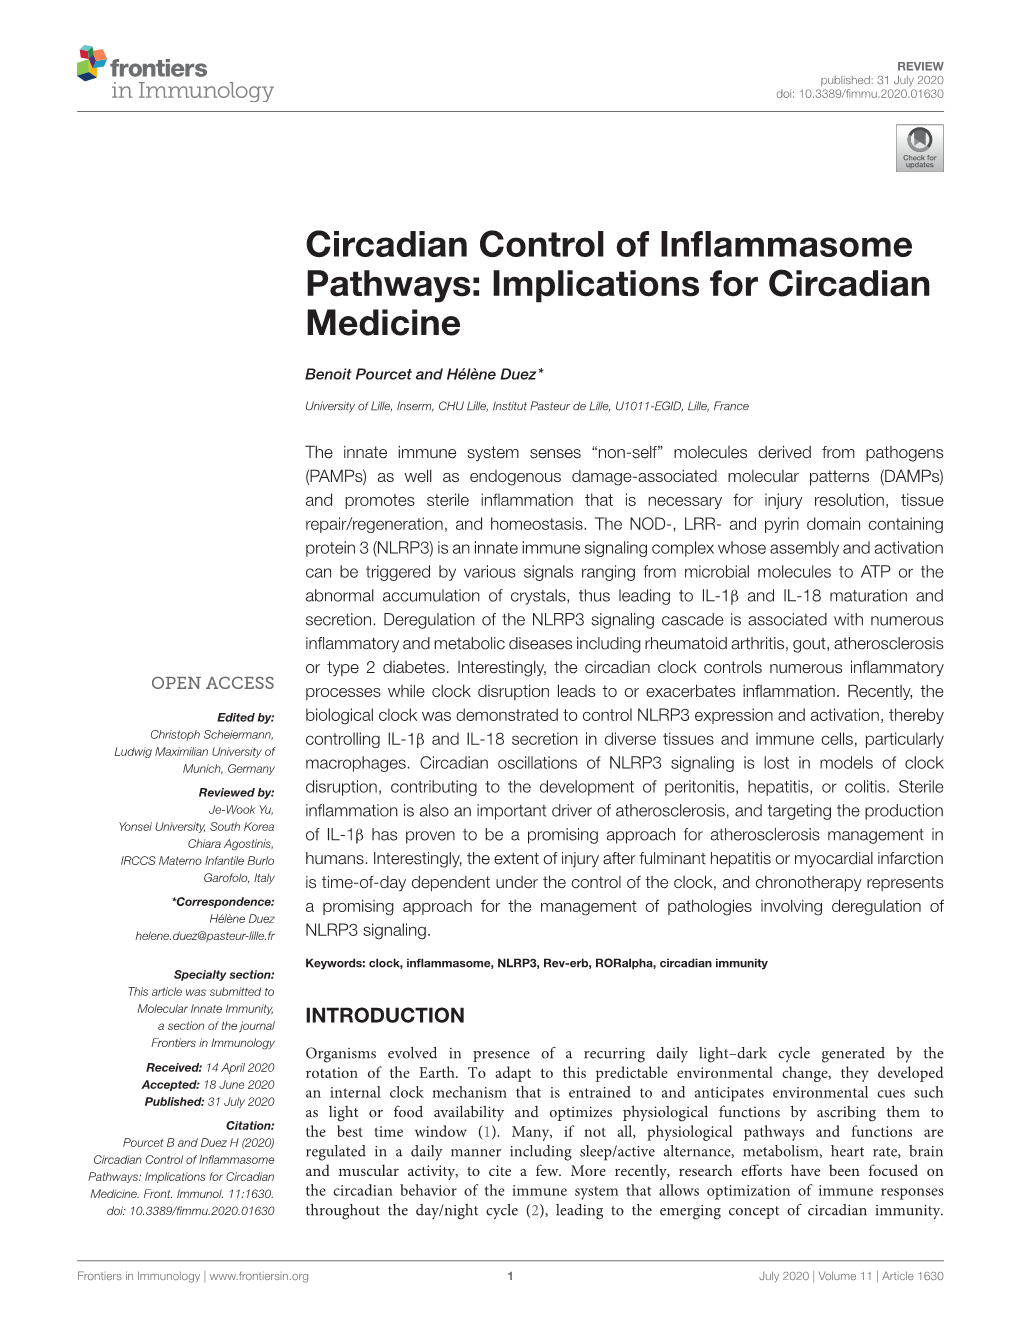 Implications for Circadian Medicine